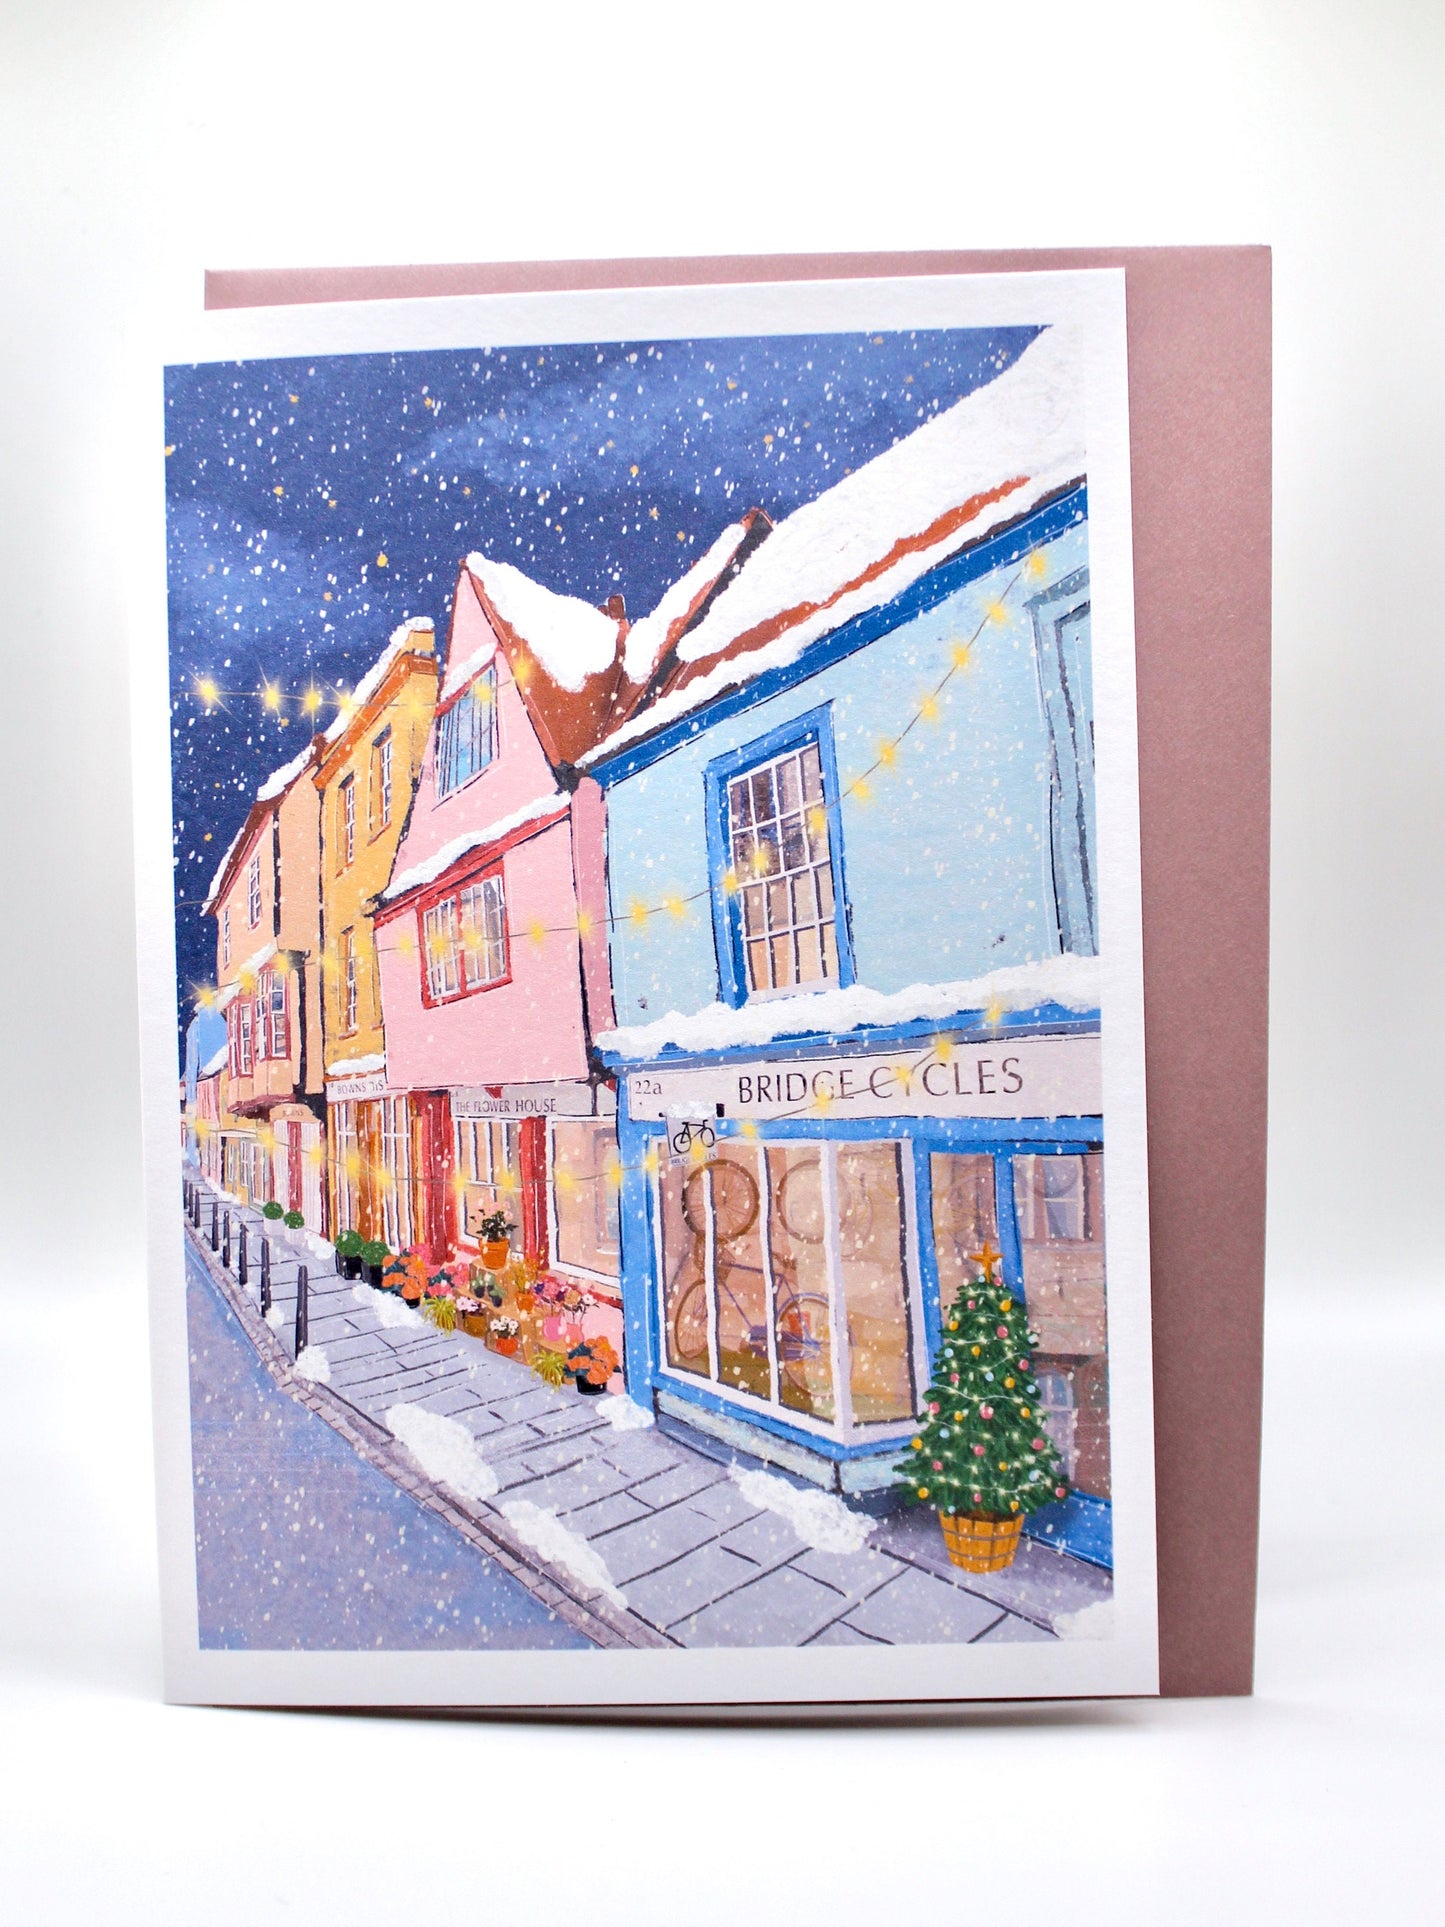 Cambridge Christmas Card Set of 3 or 6- “Cambridge Snowy Scenes”